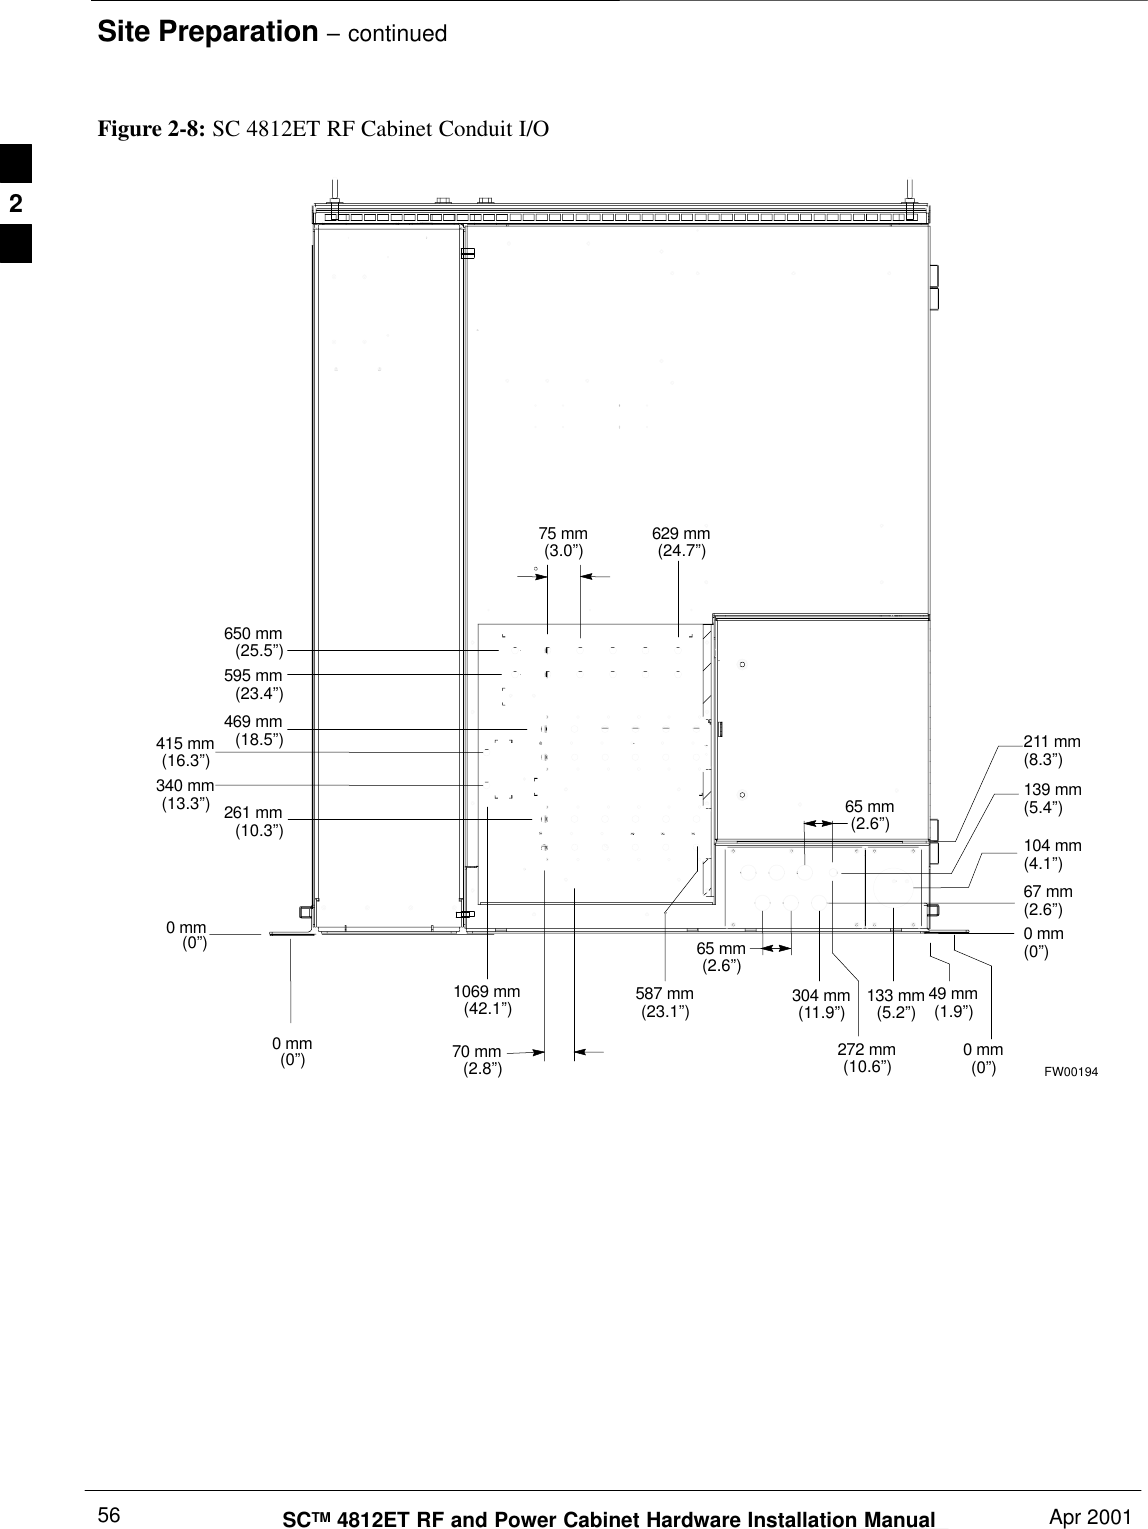 Site Preparation – continuedDRAFTSCTM 4812ET RF and Power Cabinet Hardware Installation Manual Apr 2001560 mm(0”)49 mm(1.9”)133 mm(5.2”)272 mm(10.6”)304 mm(11.9”)67 mm(2.6”)104 mm(4.1”)139 mm(5.4”)65 mm(2.6”)65 mm(2.6”)261 mm(10.3”)469 mm(18.5”)587 mm(23.1”)70 mm(2.8”)Figure 2-8: SC 4812ET RF Cabinet Conduit I/O0 mm(0”)650 mm(25.5”)595 mm(23.4”)75 mm(3.0”)629 mm(24.7”)415 mm(16.3”)340 mm(13.3”)1069 mm(42.1”)FW00194211 mm(8.3”)0 mm(0”)0 mm(0”)2